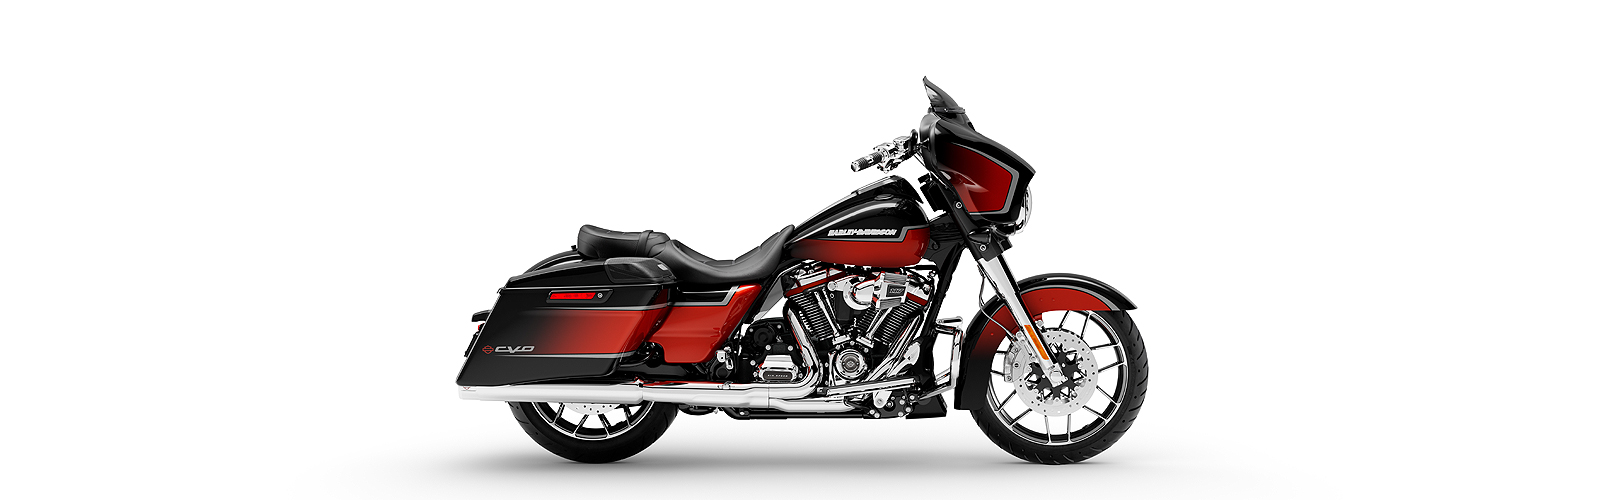 Bike Display Page Harley Davidson Media Site